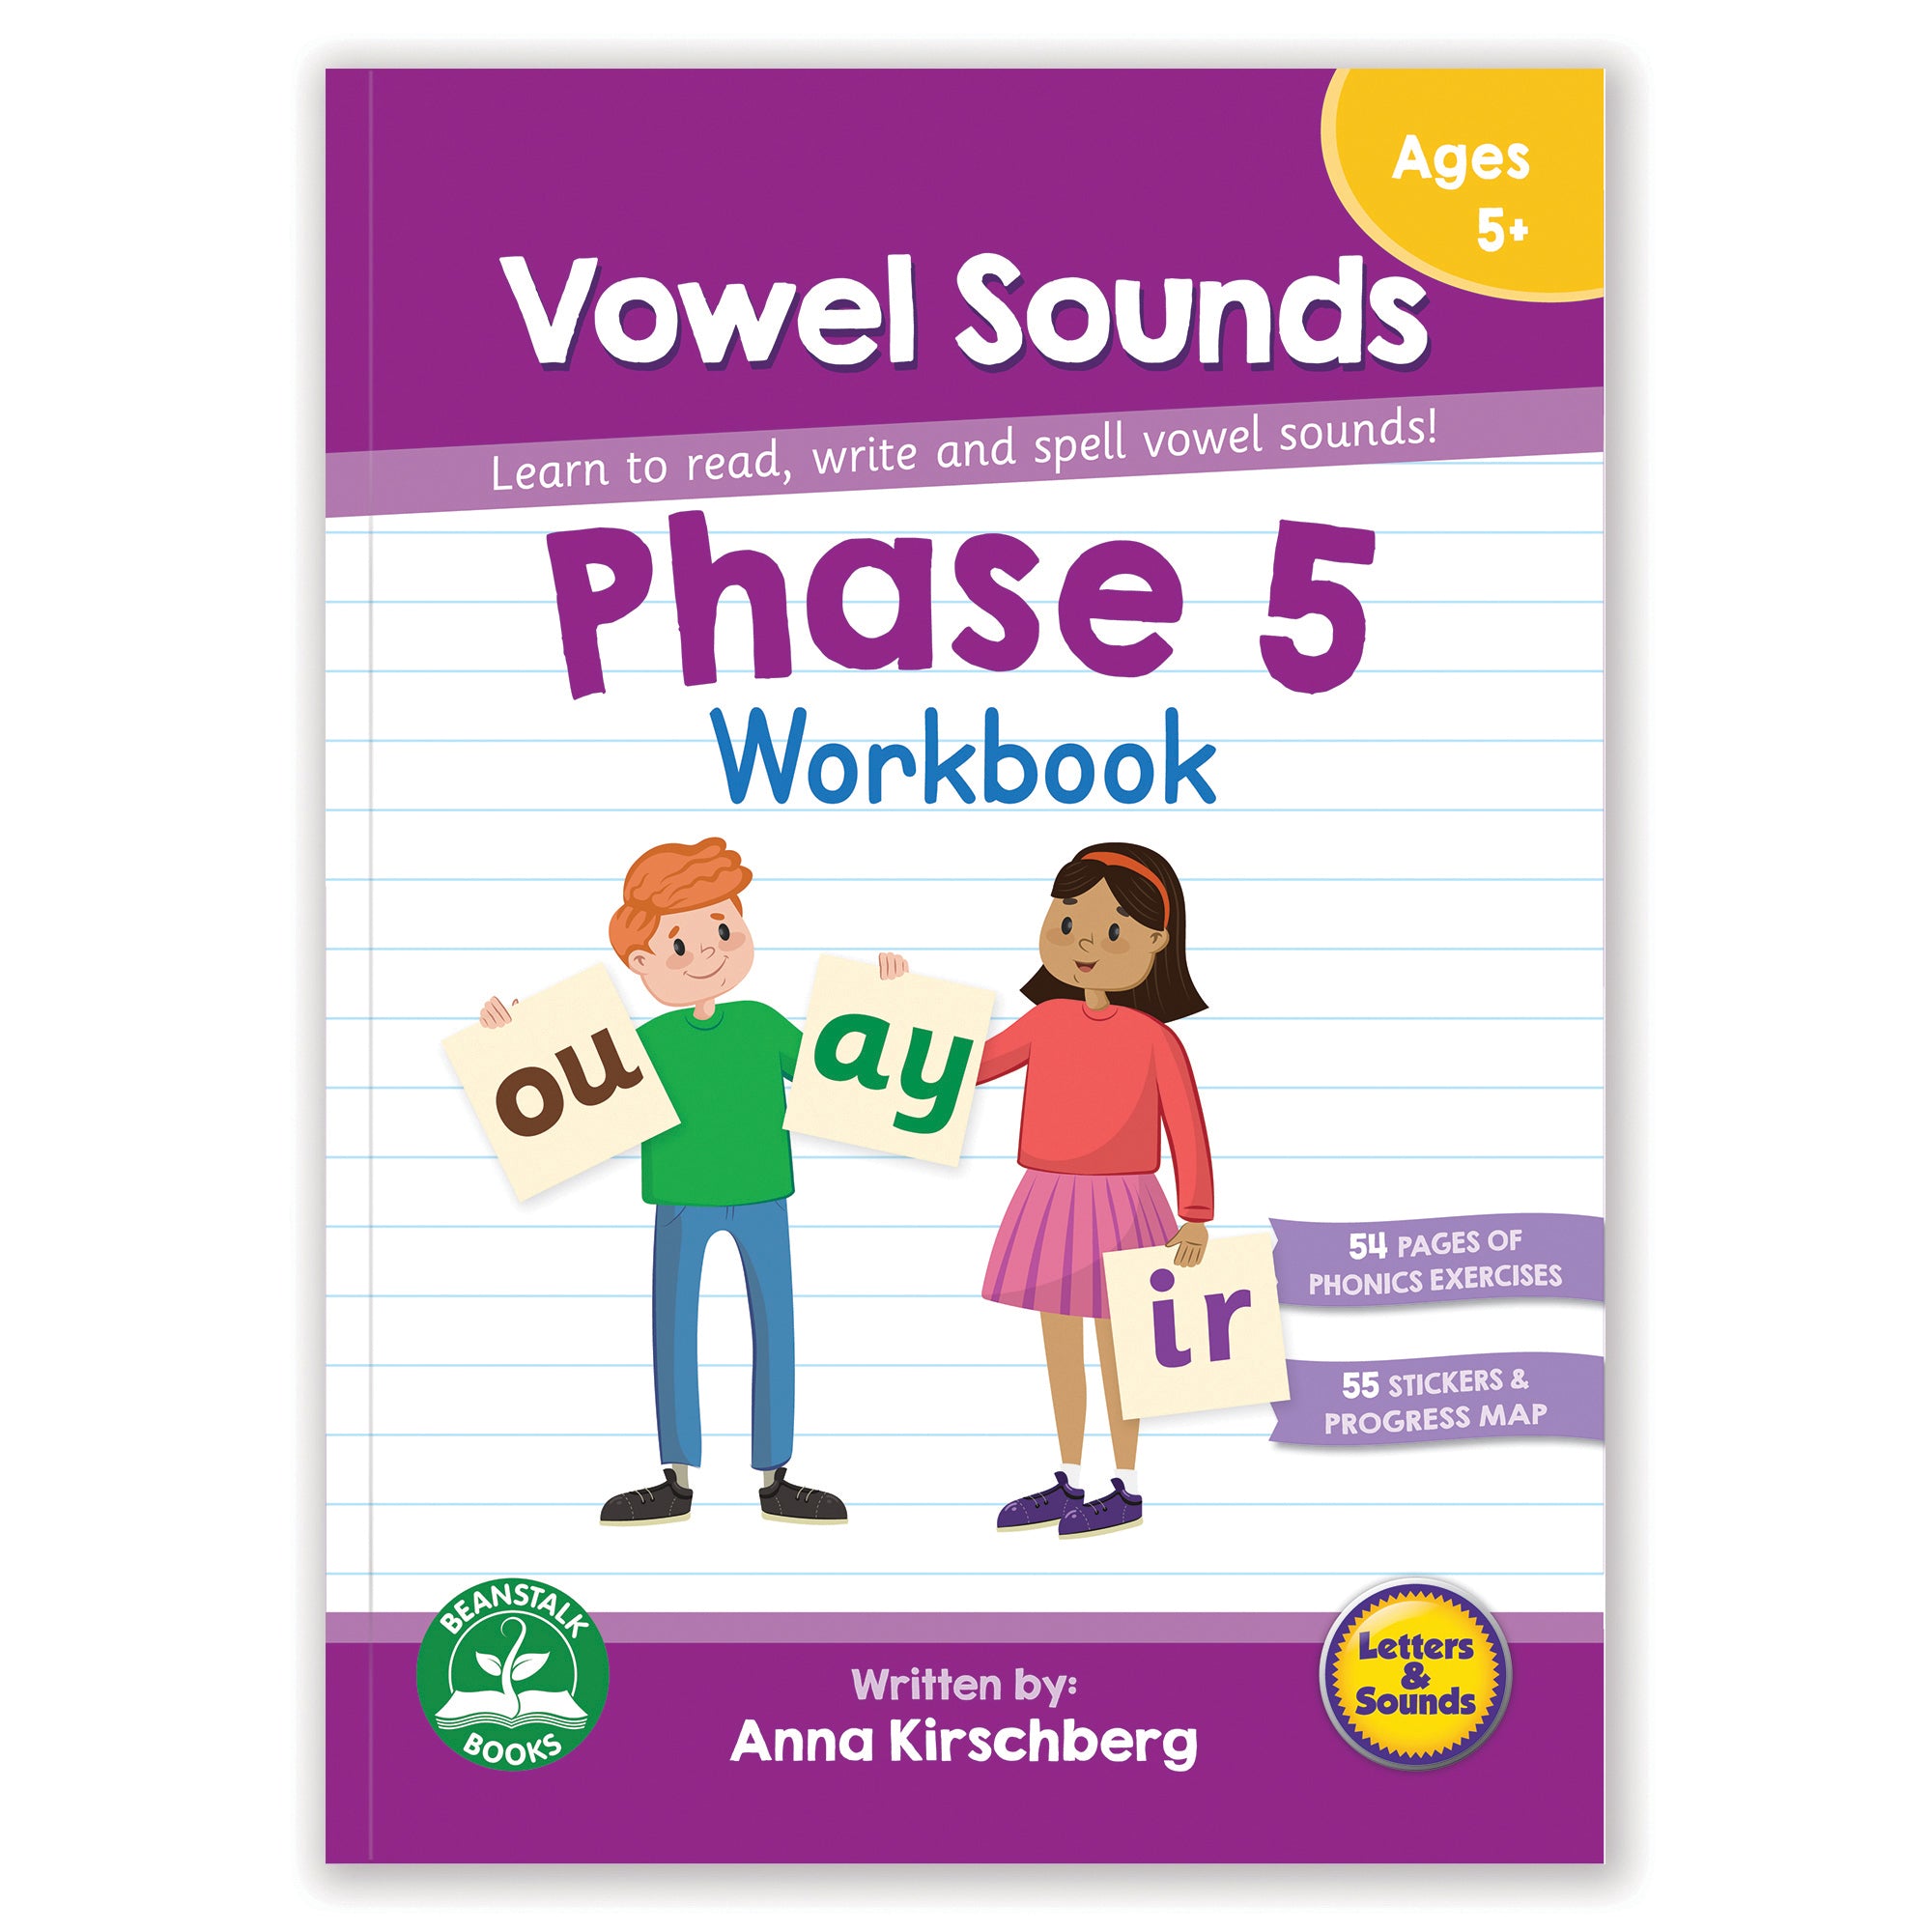 Letters & Sounds Phase 5 Vowel Sounds Single Kit